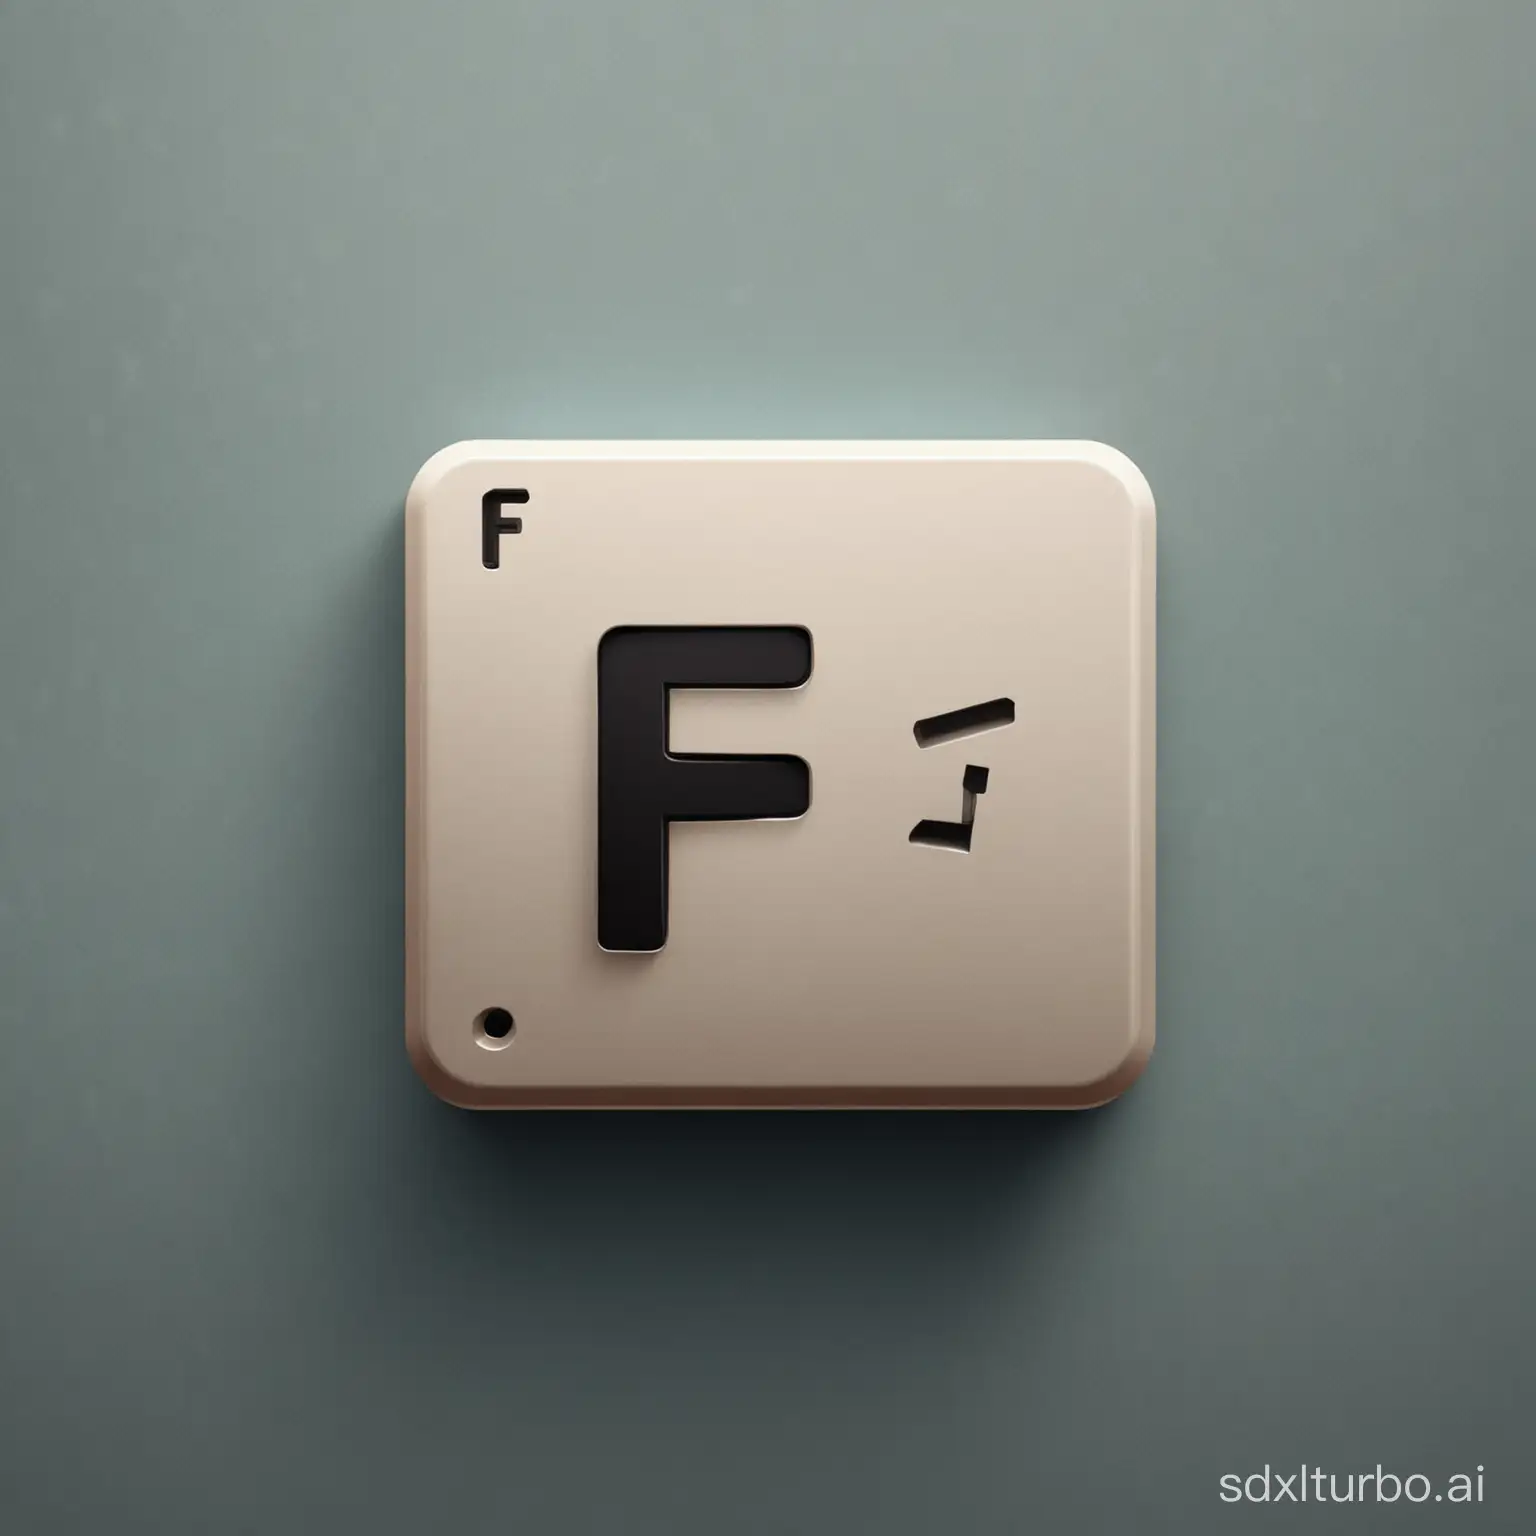 one icon of f key, beautiful